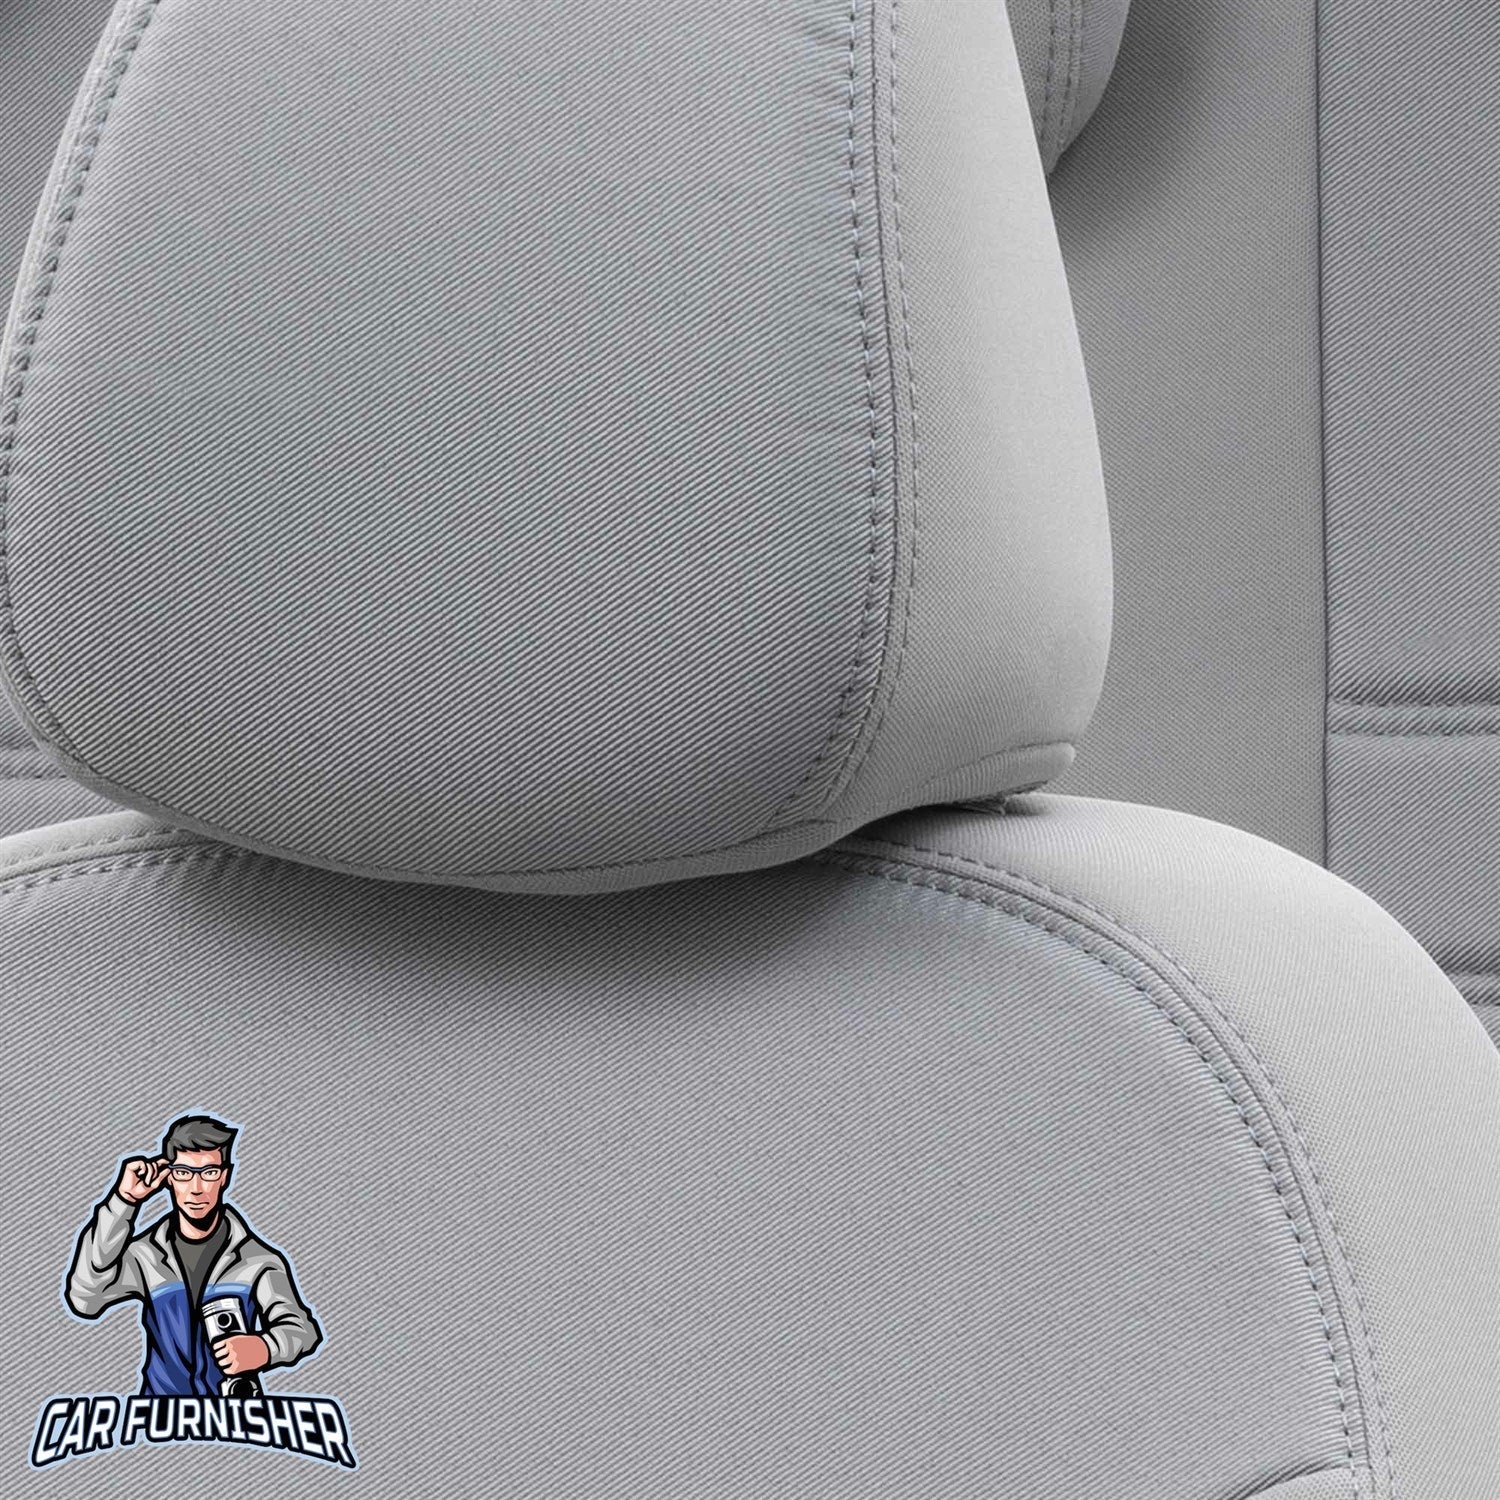 Isuzu Nlr Seat Covers Original Jacquard Design Light Gray Jacquard Fabric